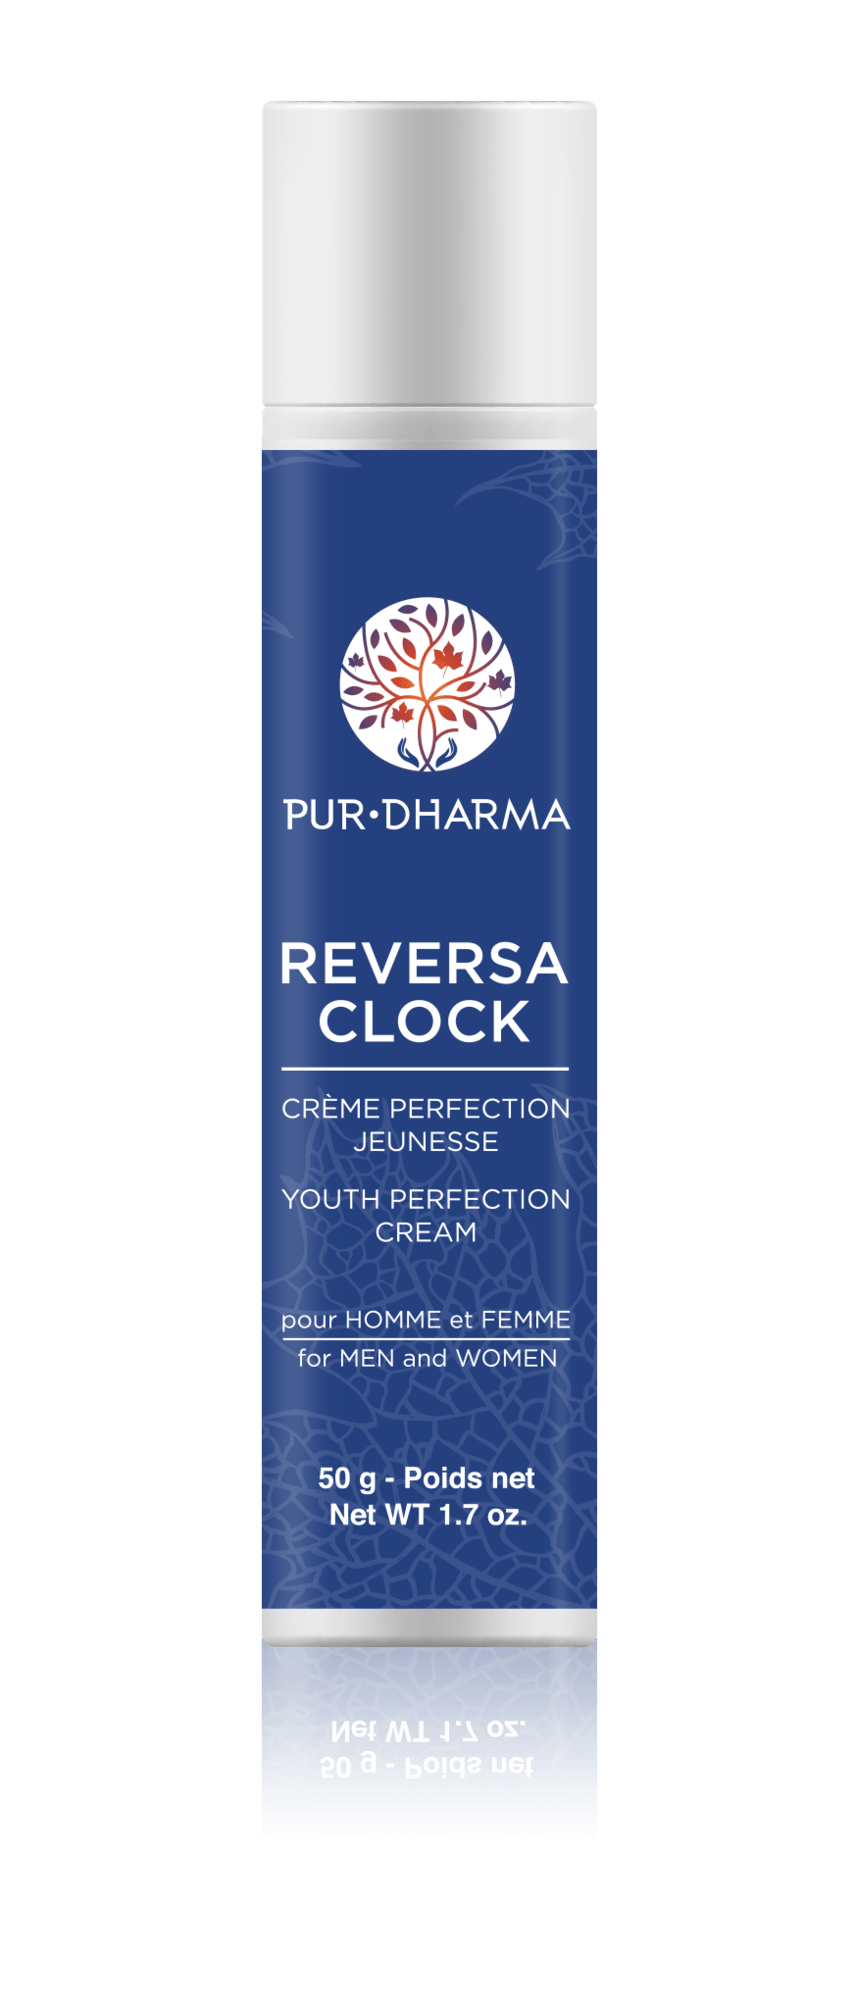 Reversa Clock - Crème Perfection jeunesse 50g - Pur Dharma - 53 Karat